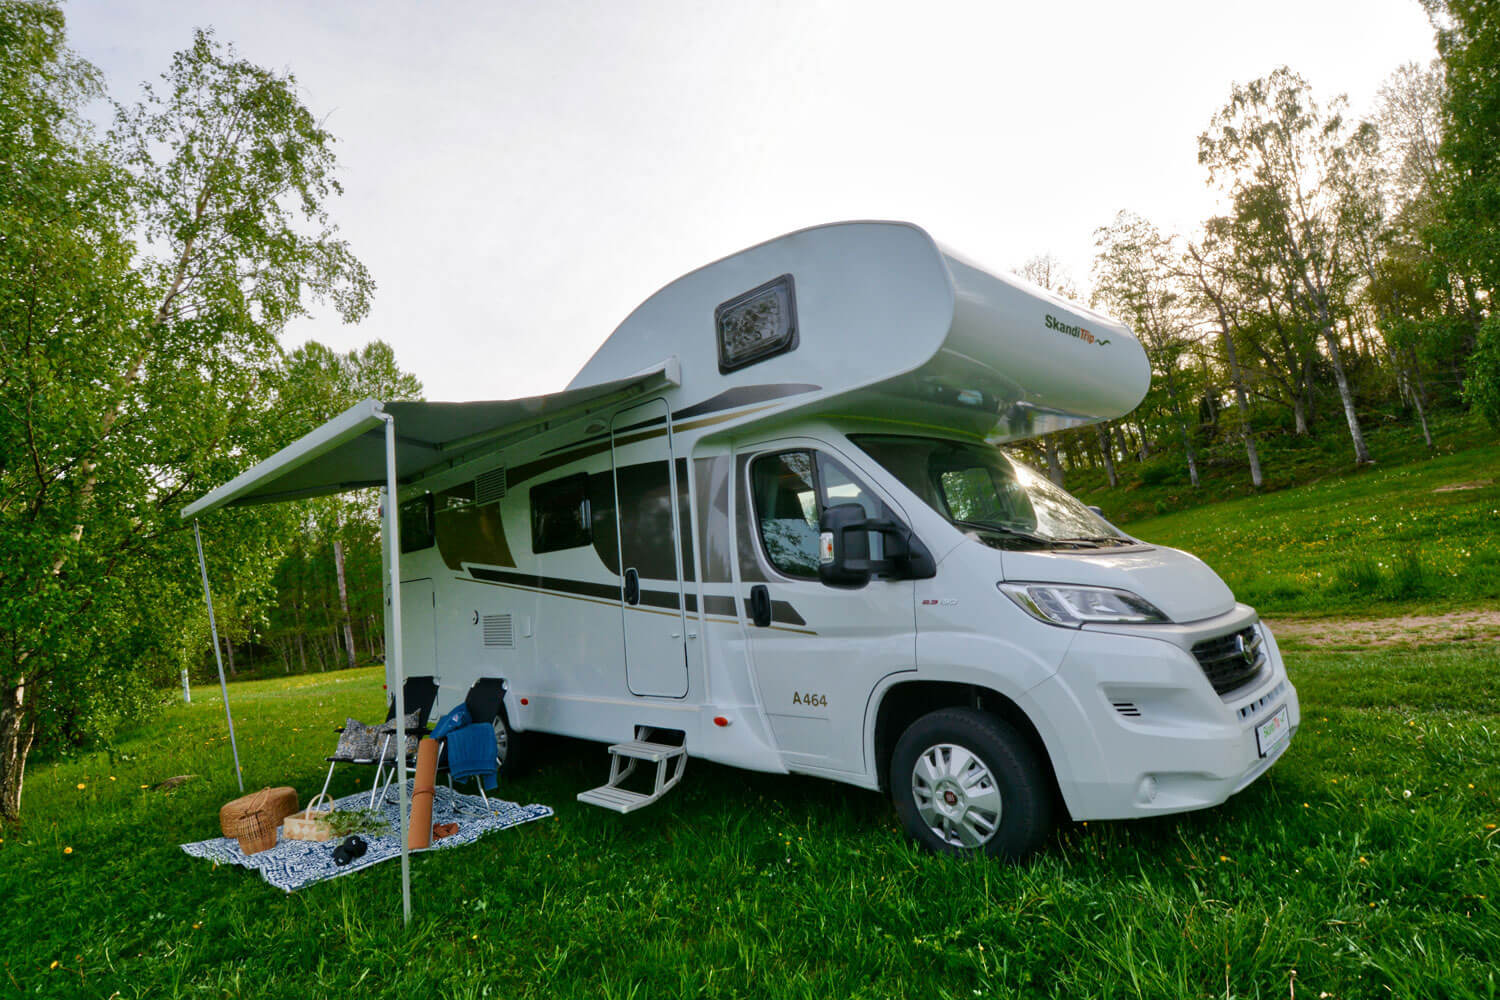 Wohnmobil Camping in Schweden